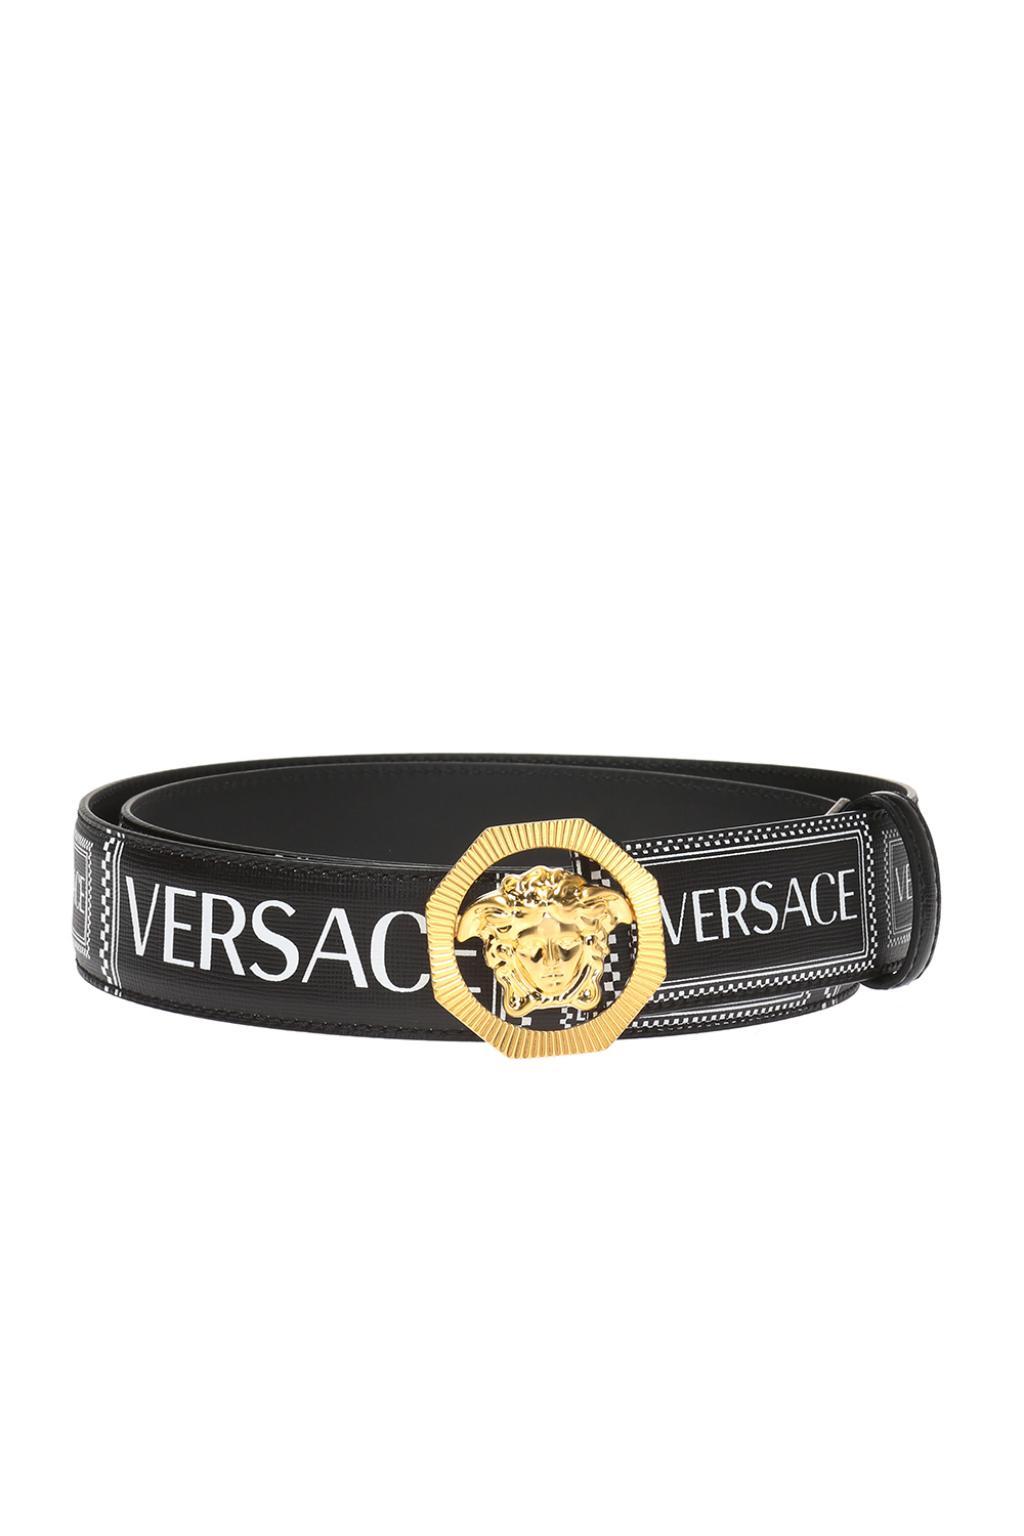 Versace Leather Medusa-buckle Belt in Black for Men - Lyst